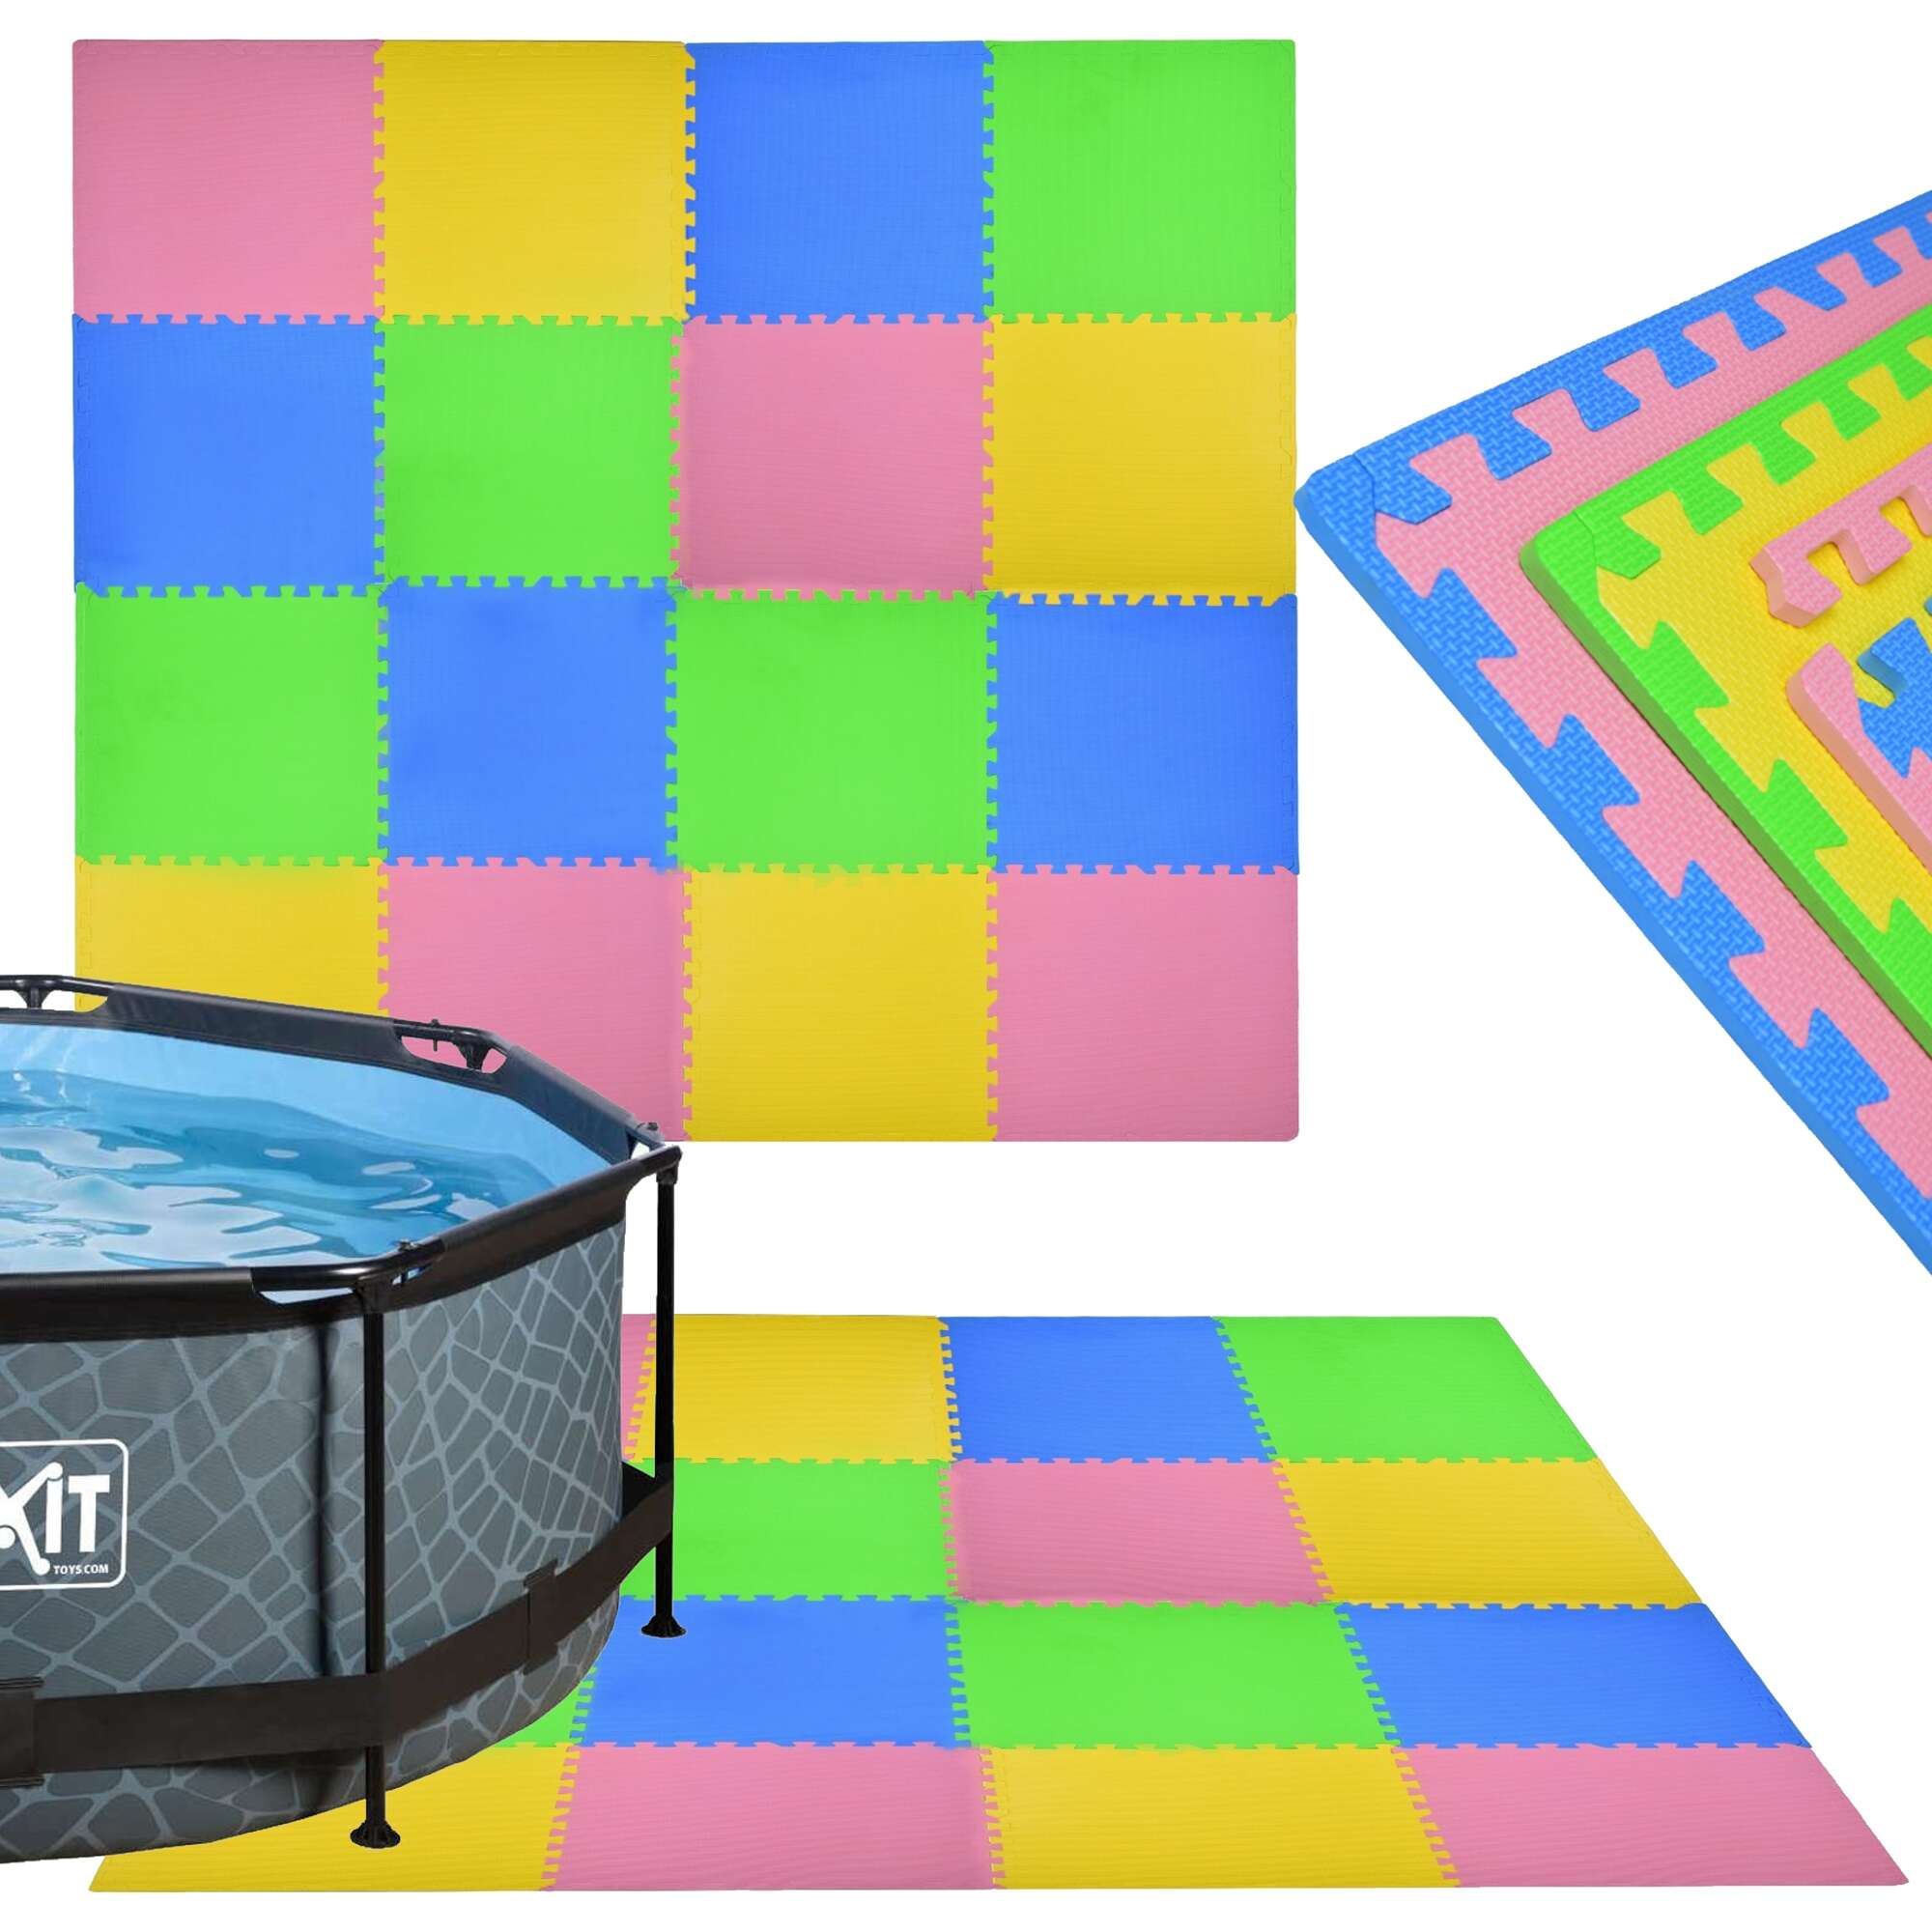 Humbi mata piankowa puzzle piankowe fitness wodoodporne pod basen 16 szt. kolorowa 240 x 240 x 1 cm